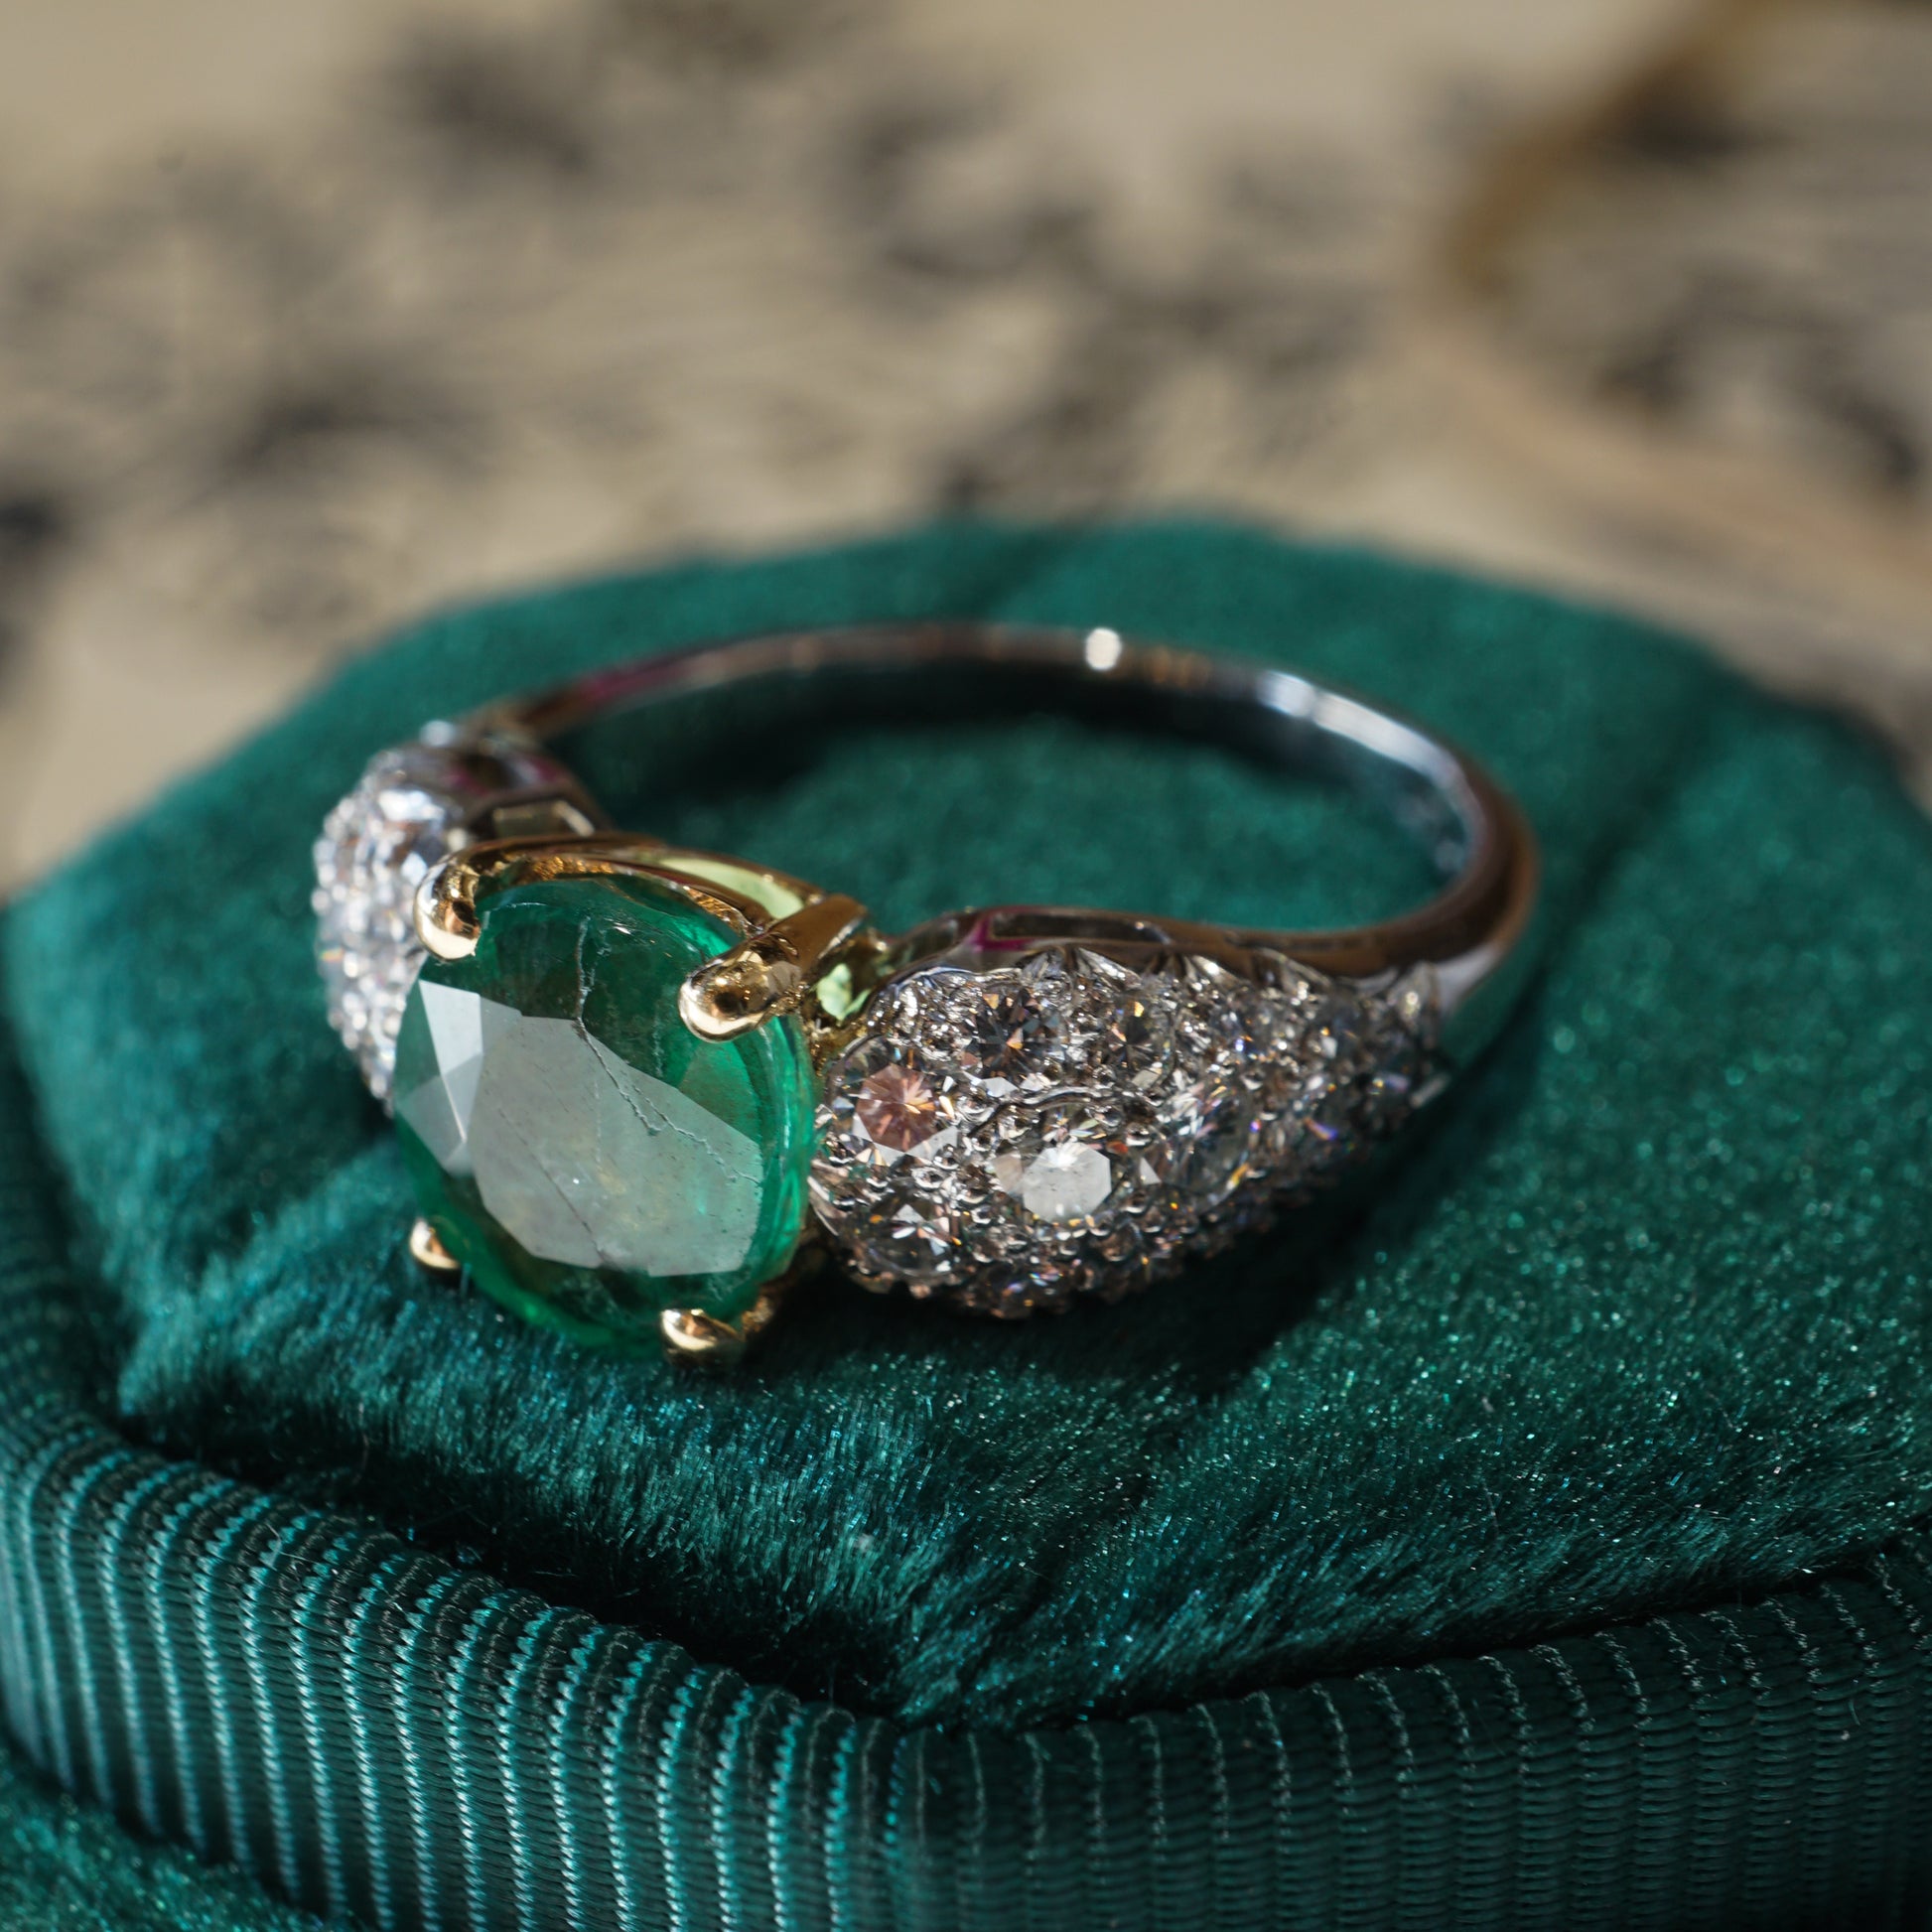 1.39 Oval Cut Emerald & Pave Diamond Ring in Platinum & 14kComposition: Platinum/14 Karat Yellow GoldRing Size: 7.25Total Diamond Weight: .46 ctTotal Gram Weight: 5.8 gInscription: PLAT